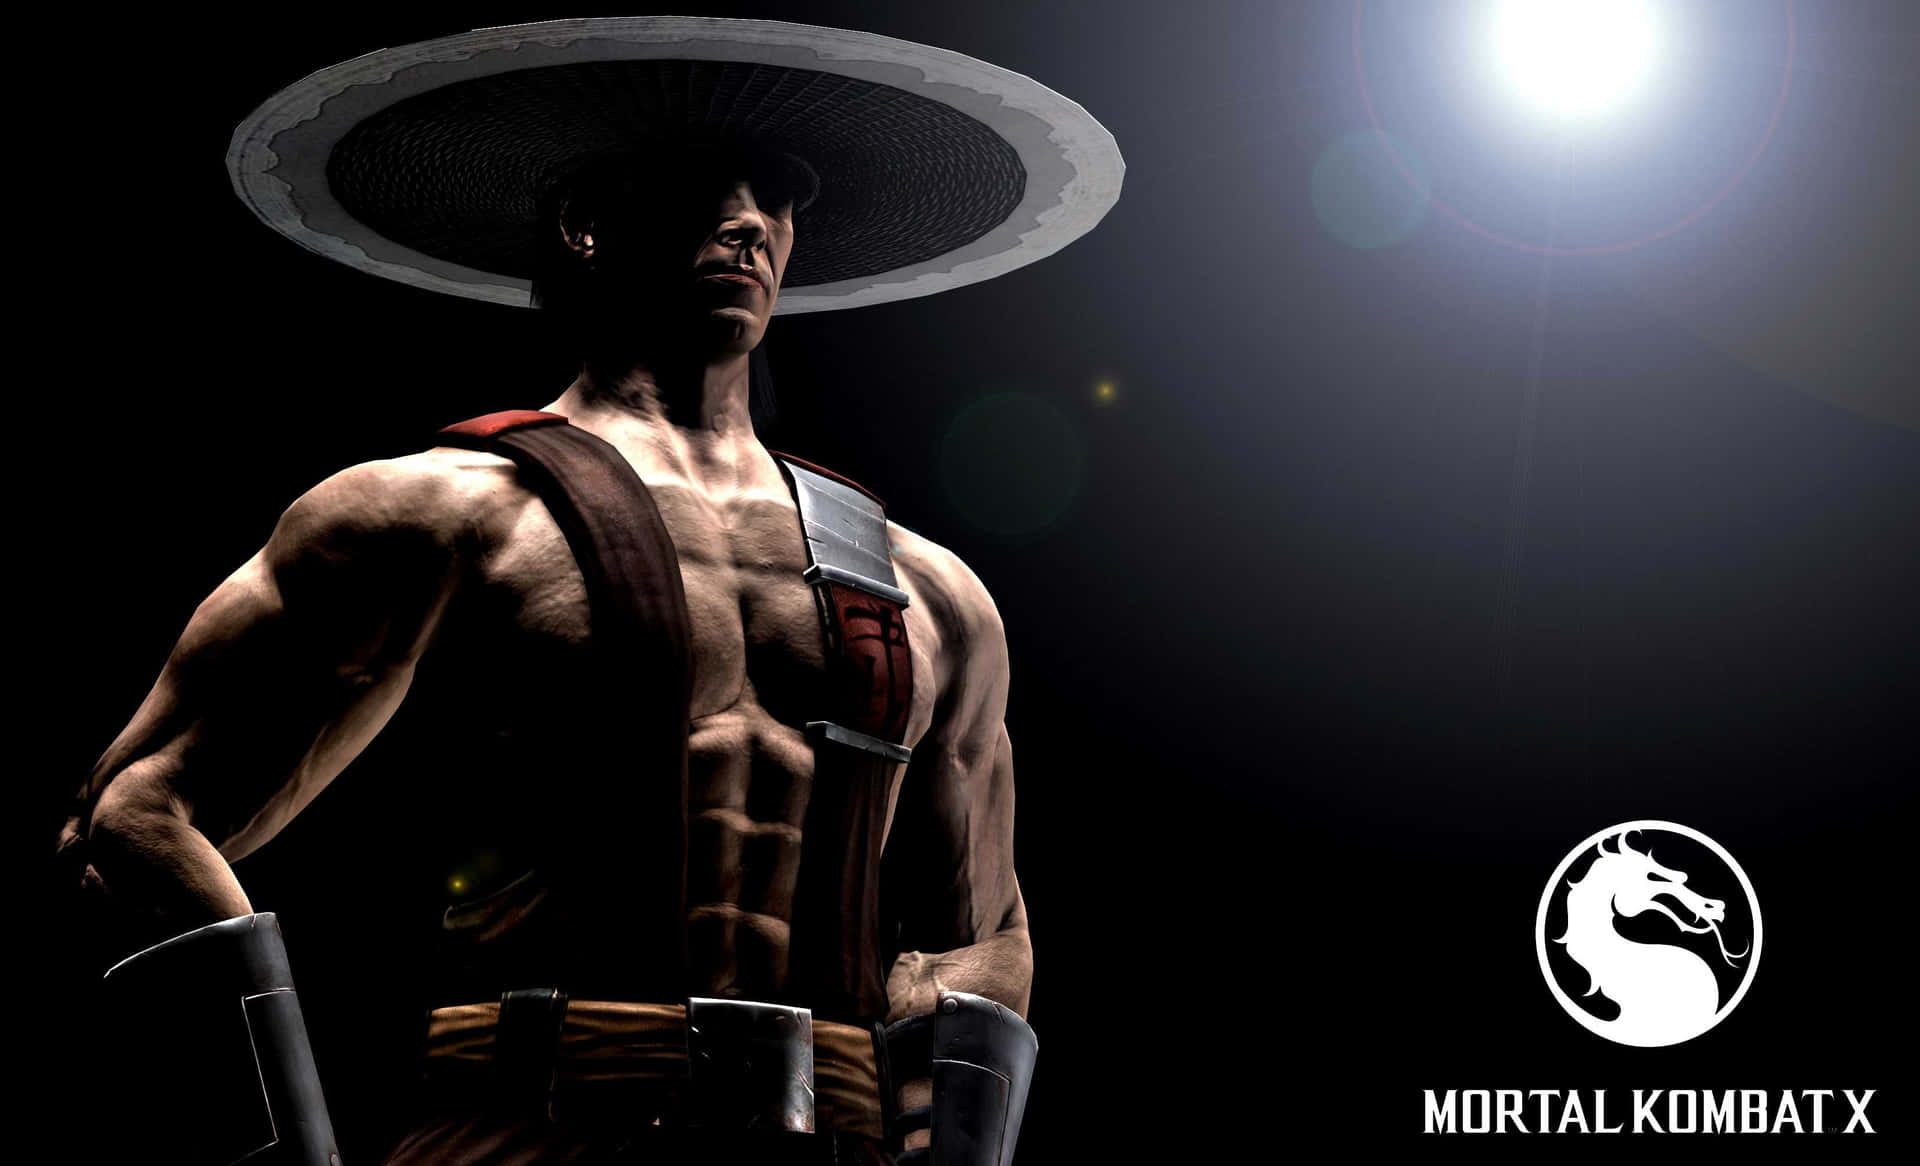 Kung Lao unleashes his lethal skills in Mortal Kombat Wallpaper